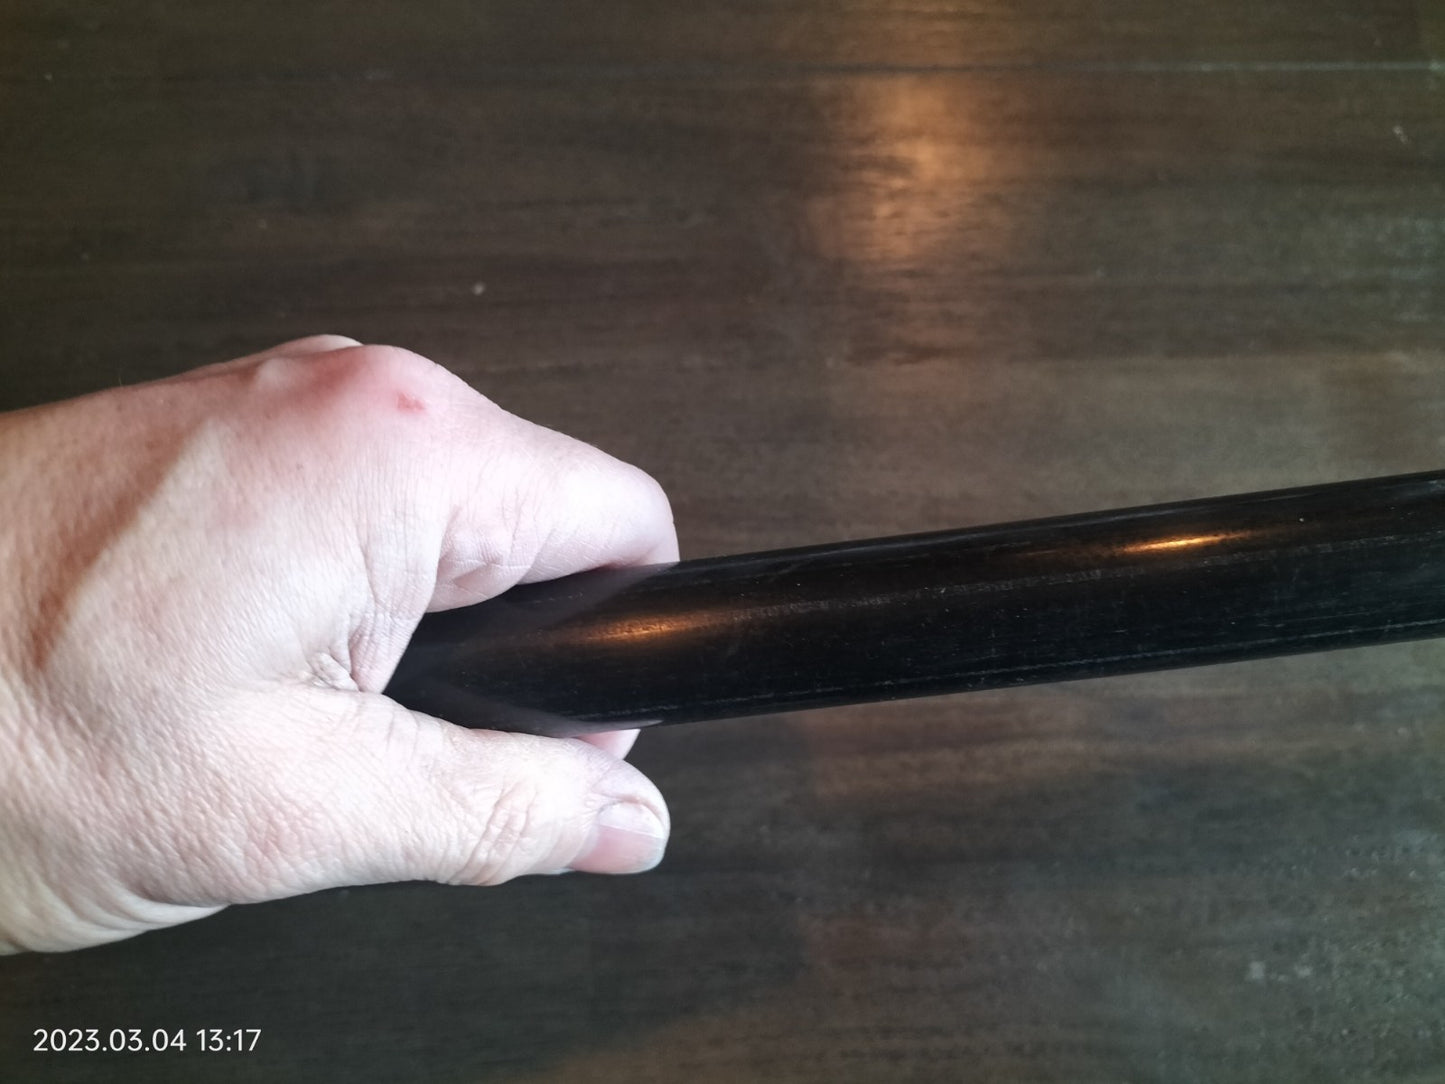 Le Baton, the cane of 25 mm diameter